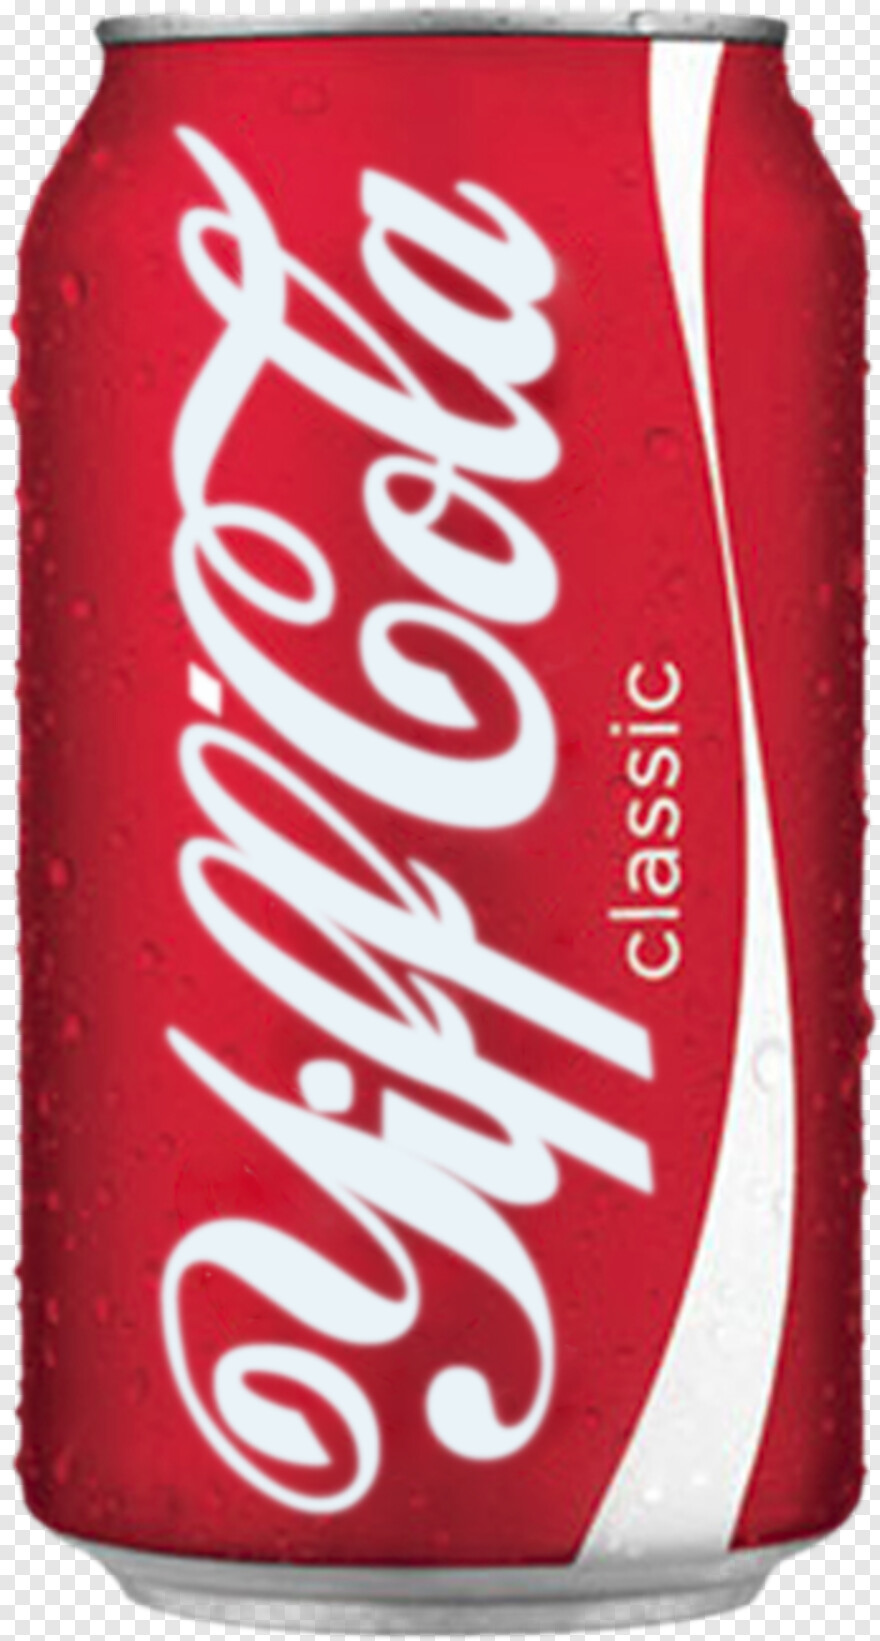 Coca Cola, Coca Cola Logo, Nuka Cola, Coca Cola Bottle, Coca Cola Can, Coke  Can #531296 - Free Icon Library